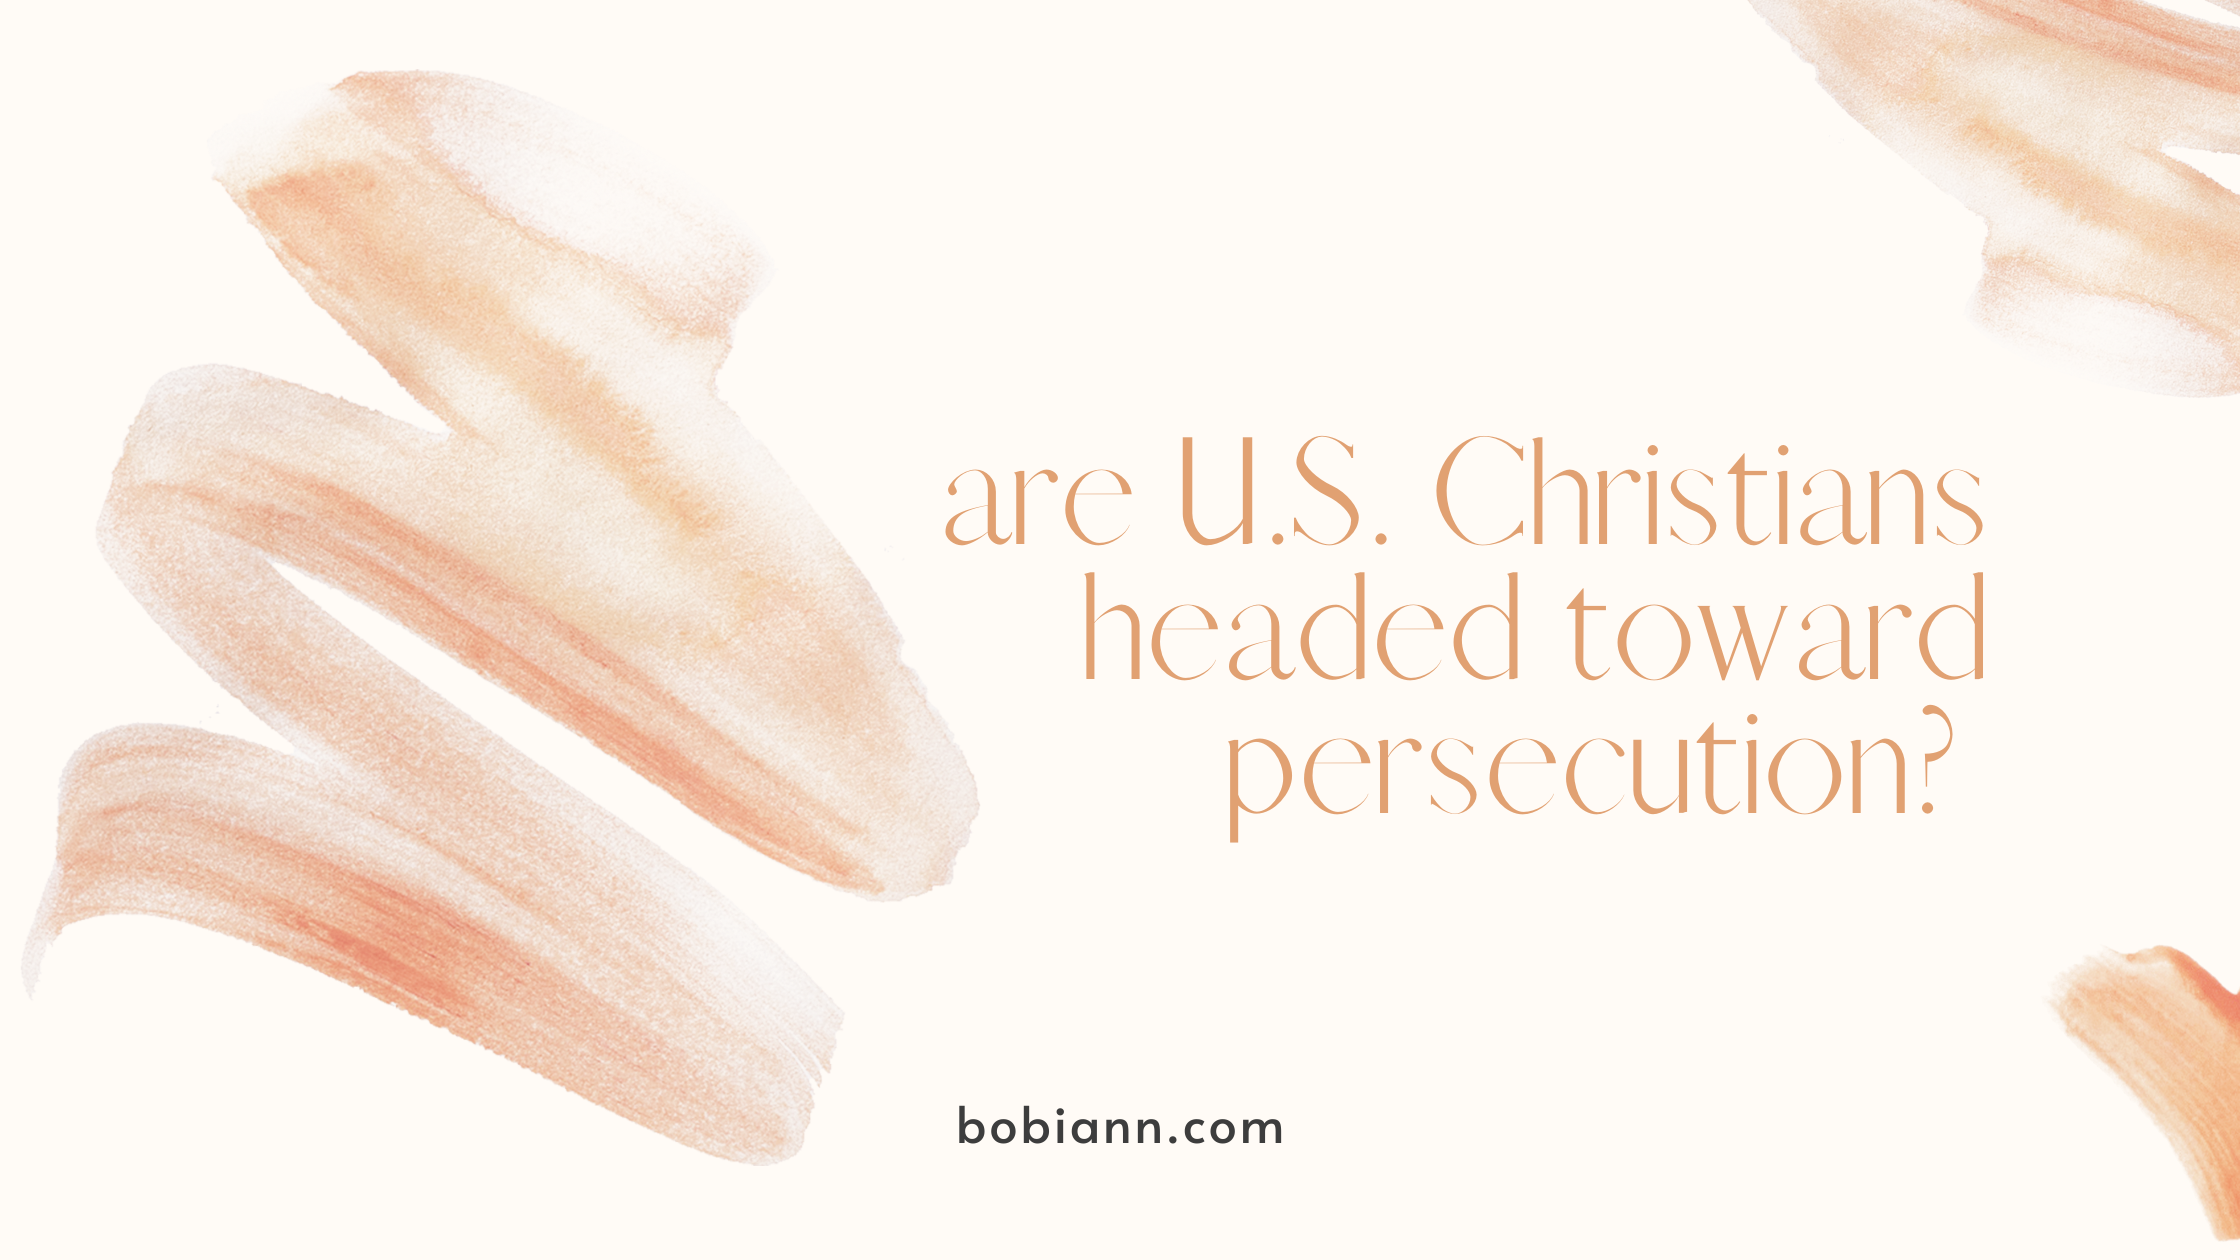 are U.S. Christians headed toward persecution?